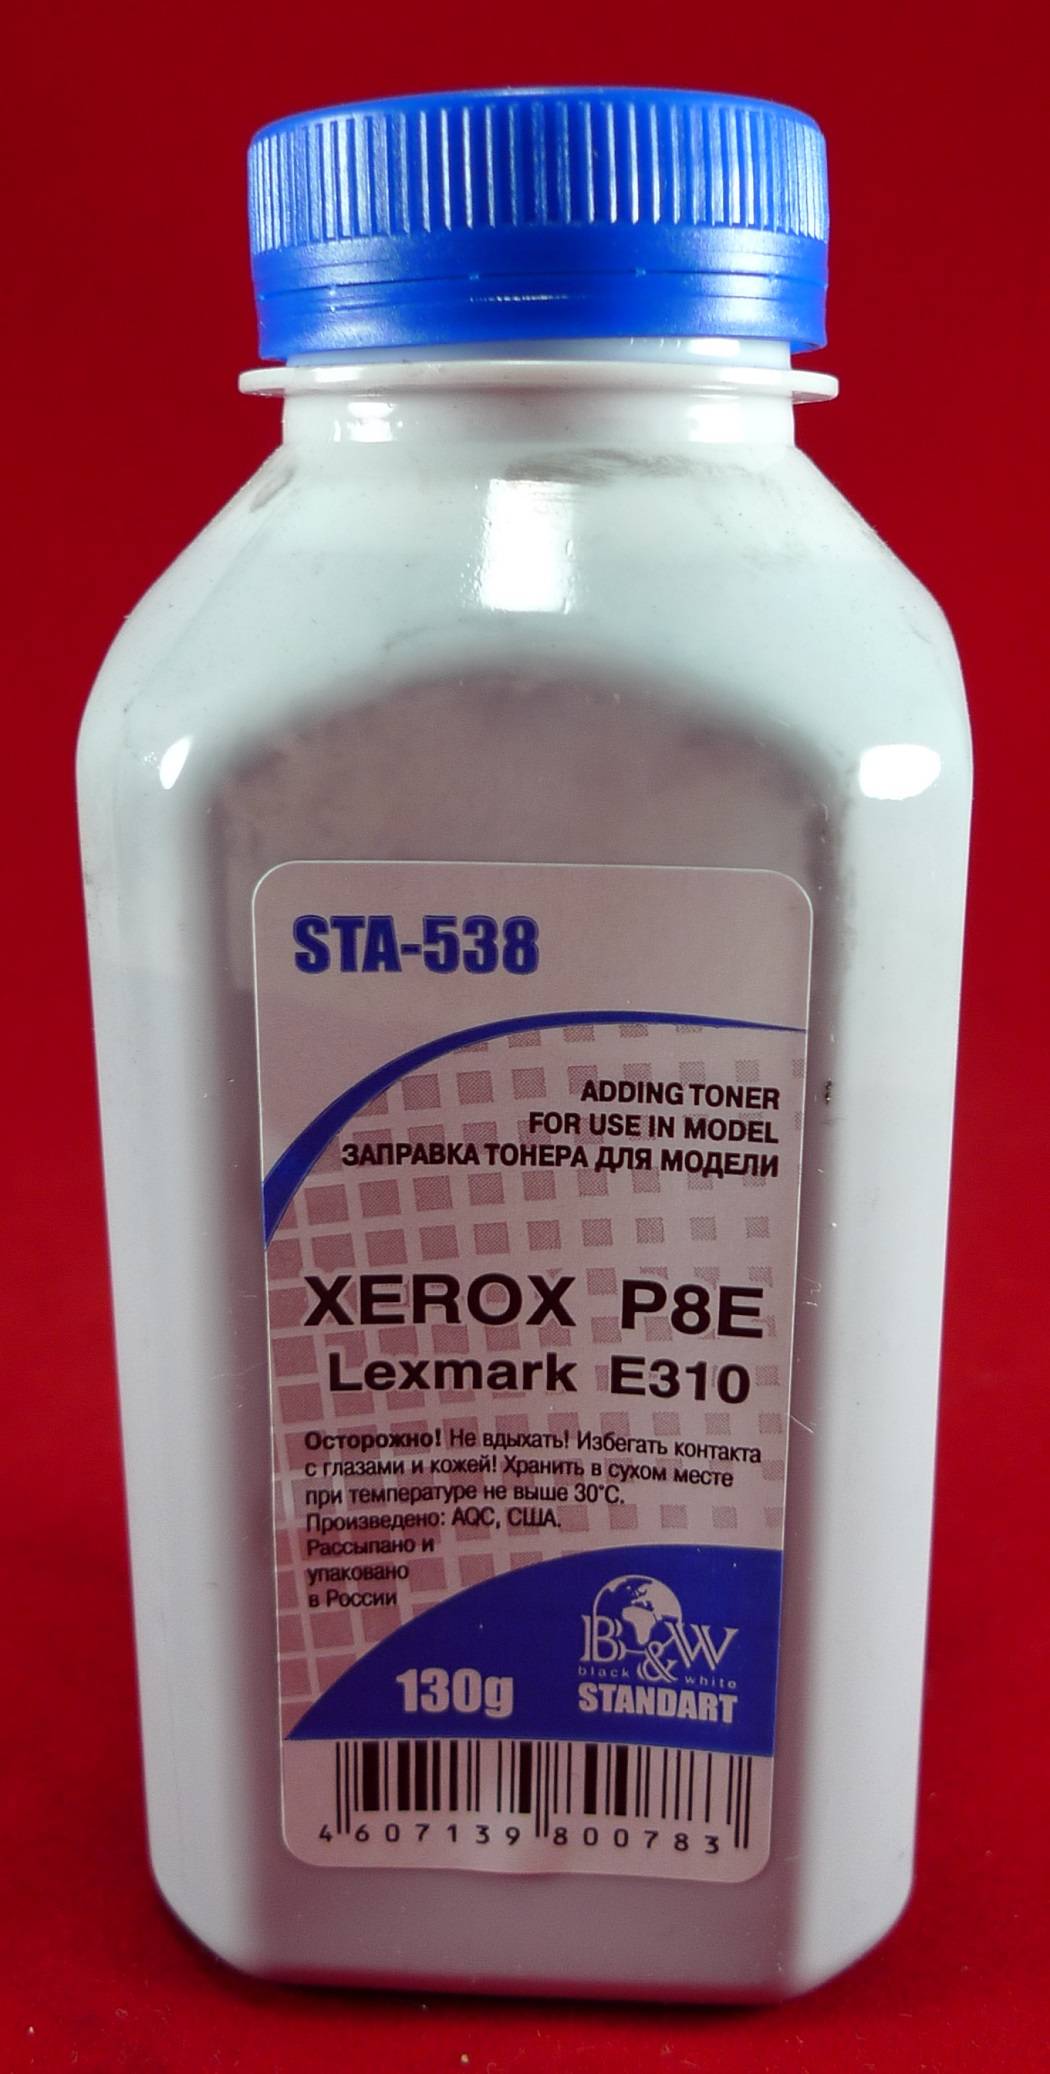 Тонер XEROX P8e/Lexmark E310 (фл. 130г) Black&White Standart фас.Россия